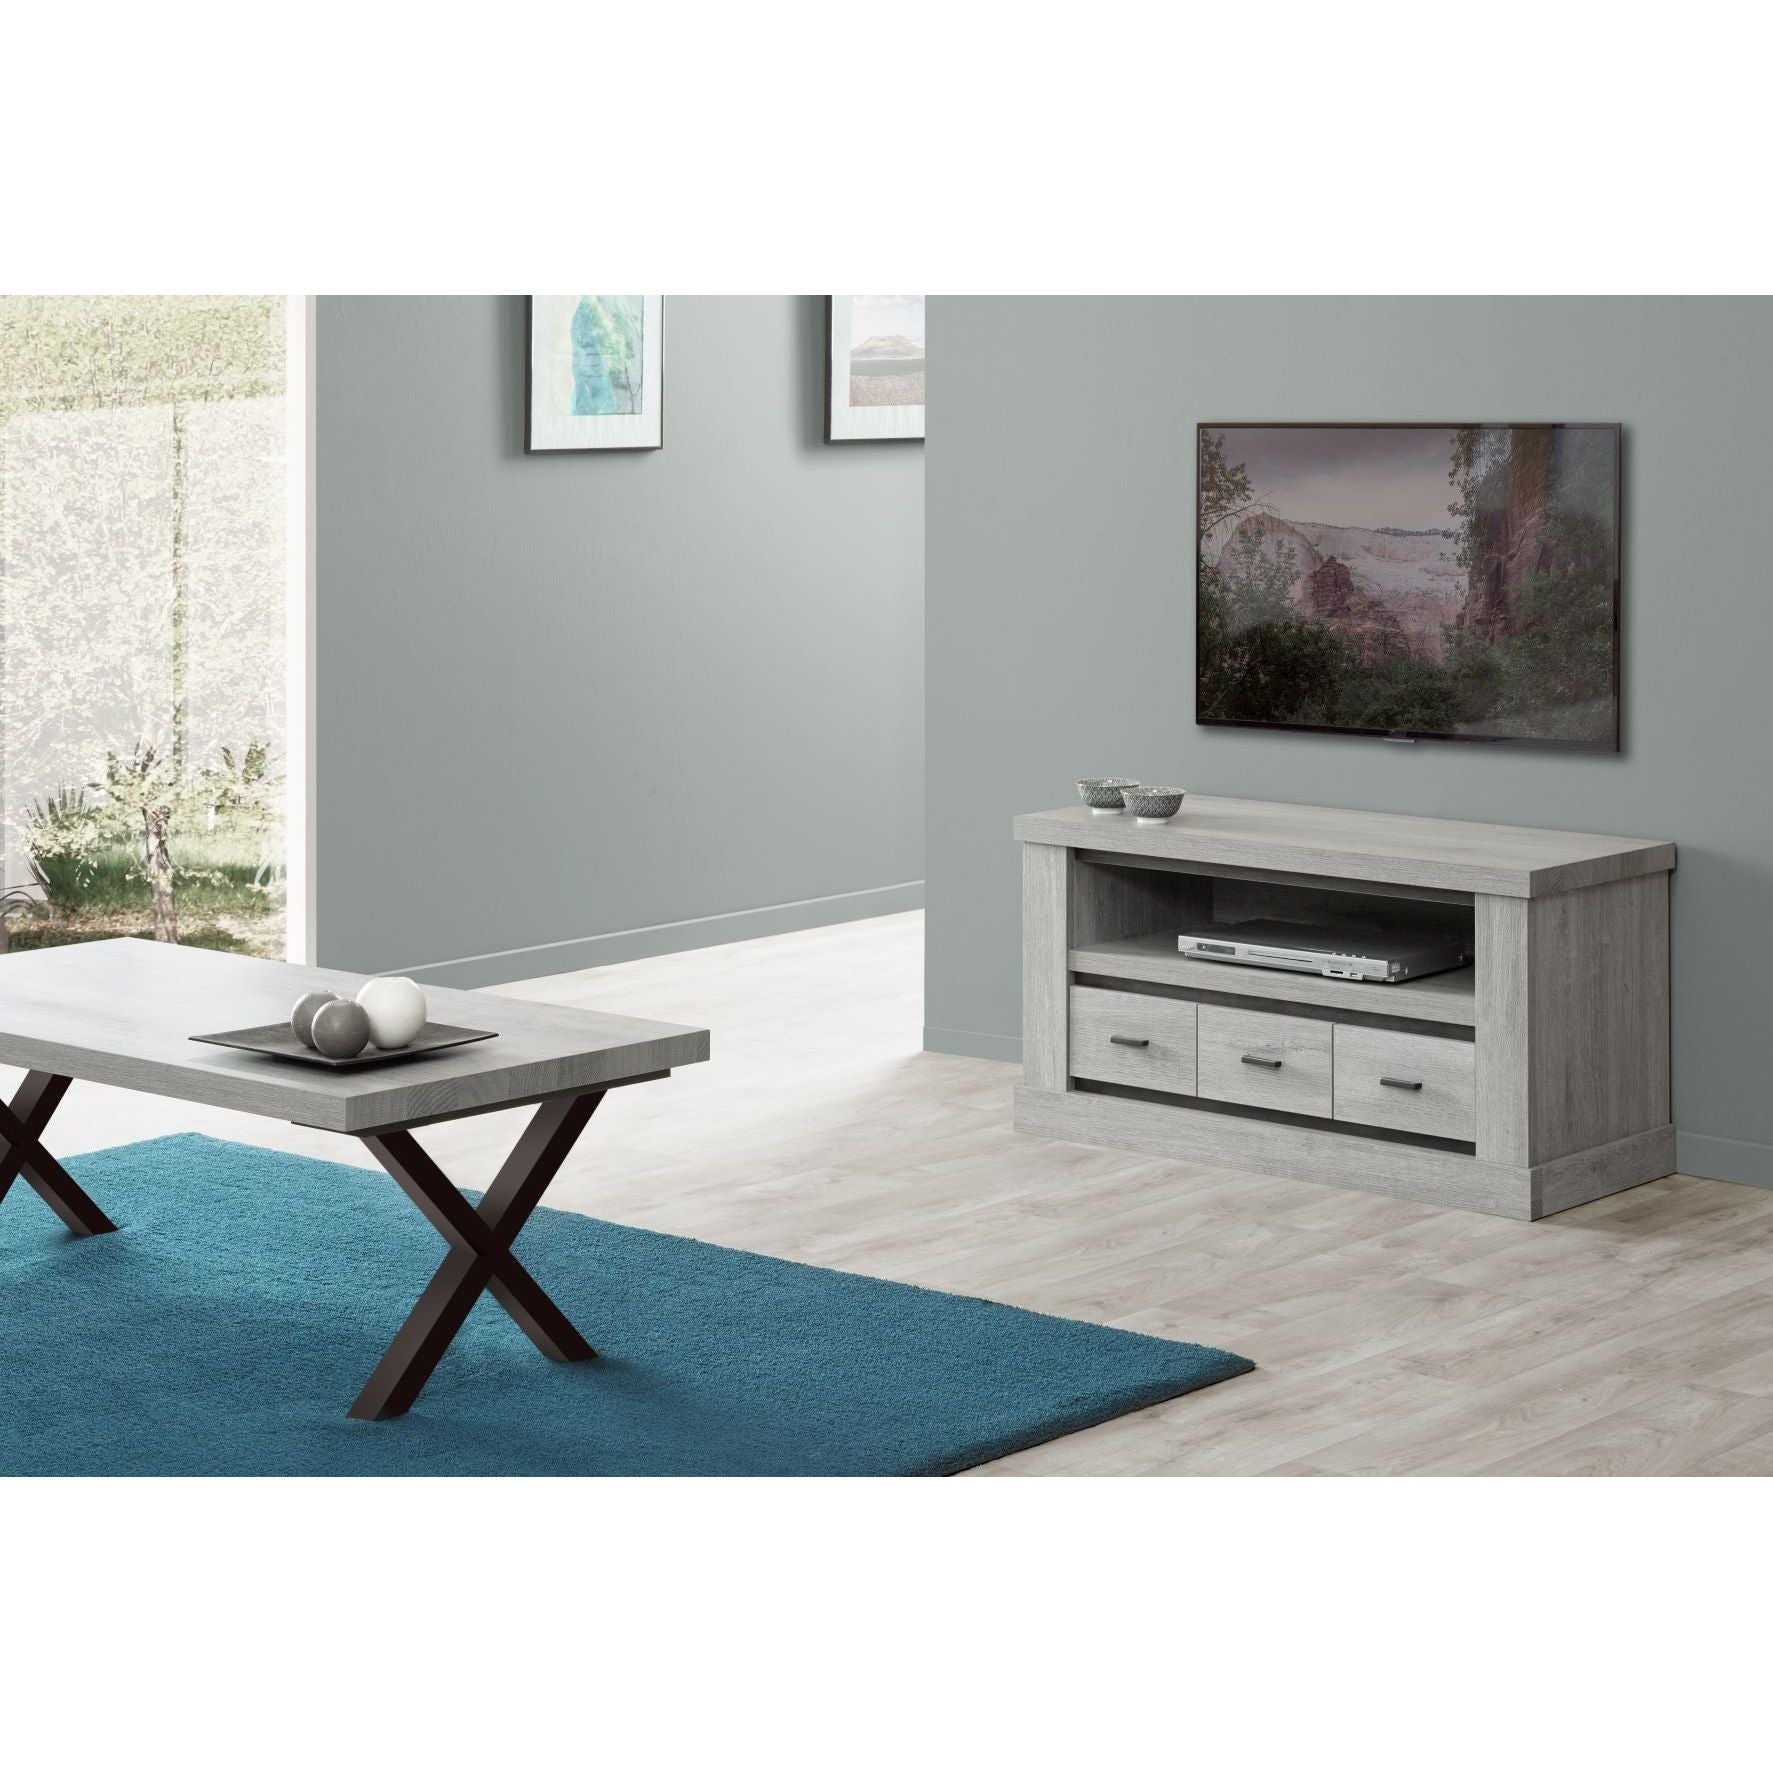 Dresser | Furniture series Coupé | natural, gray, black | 248x